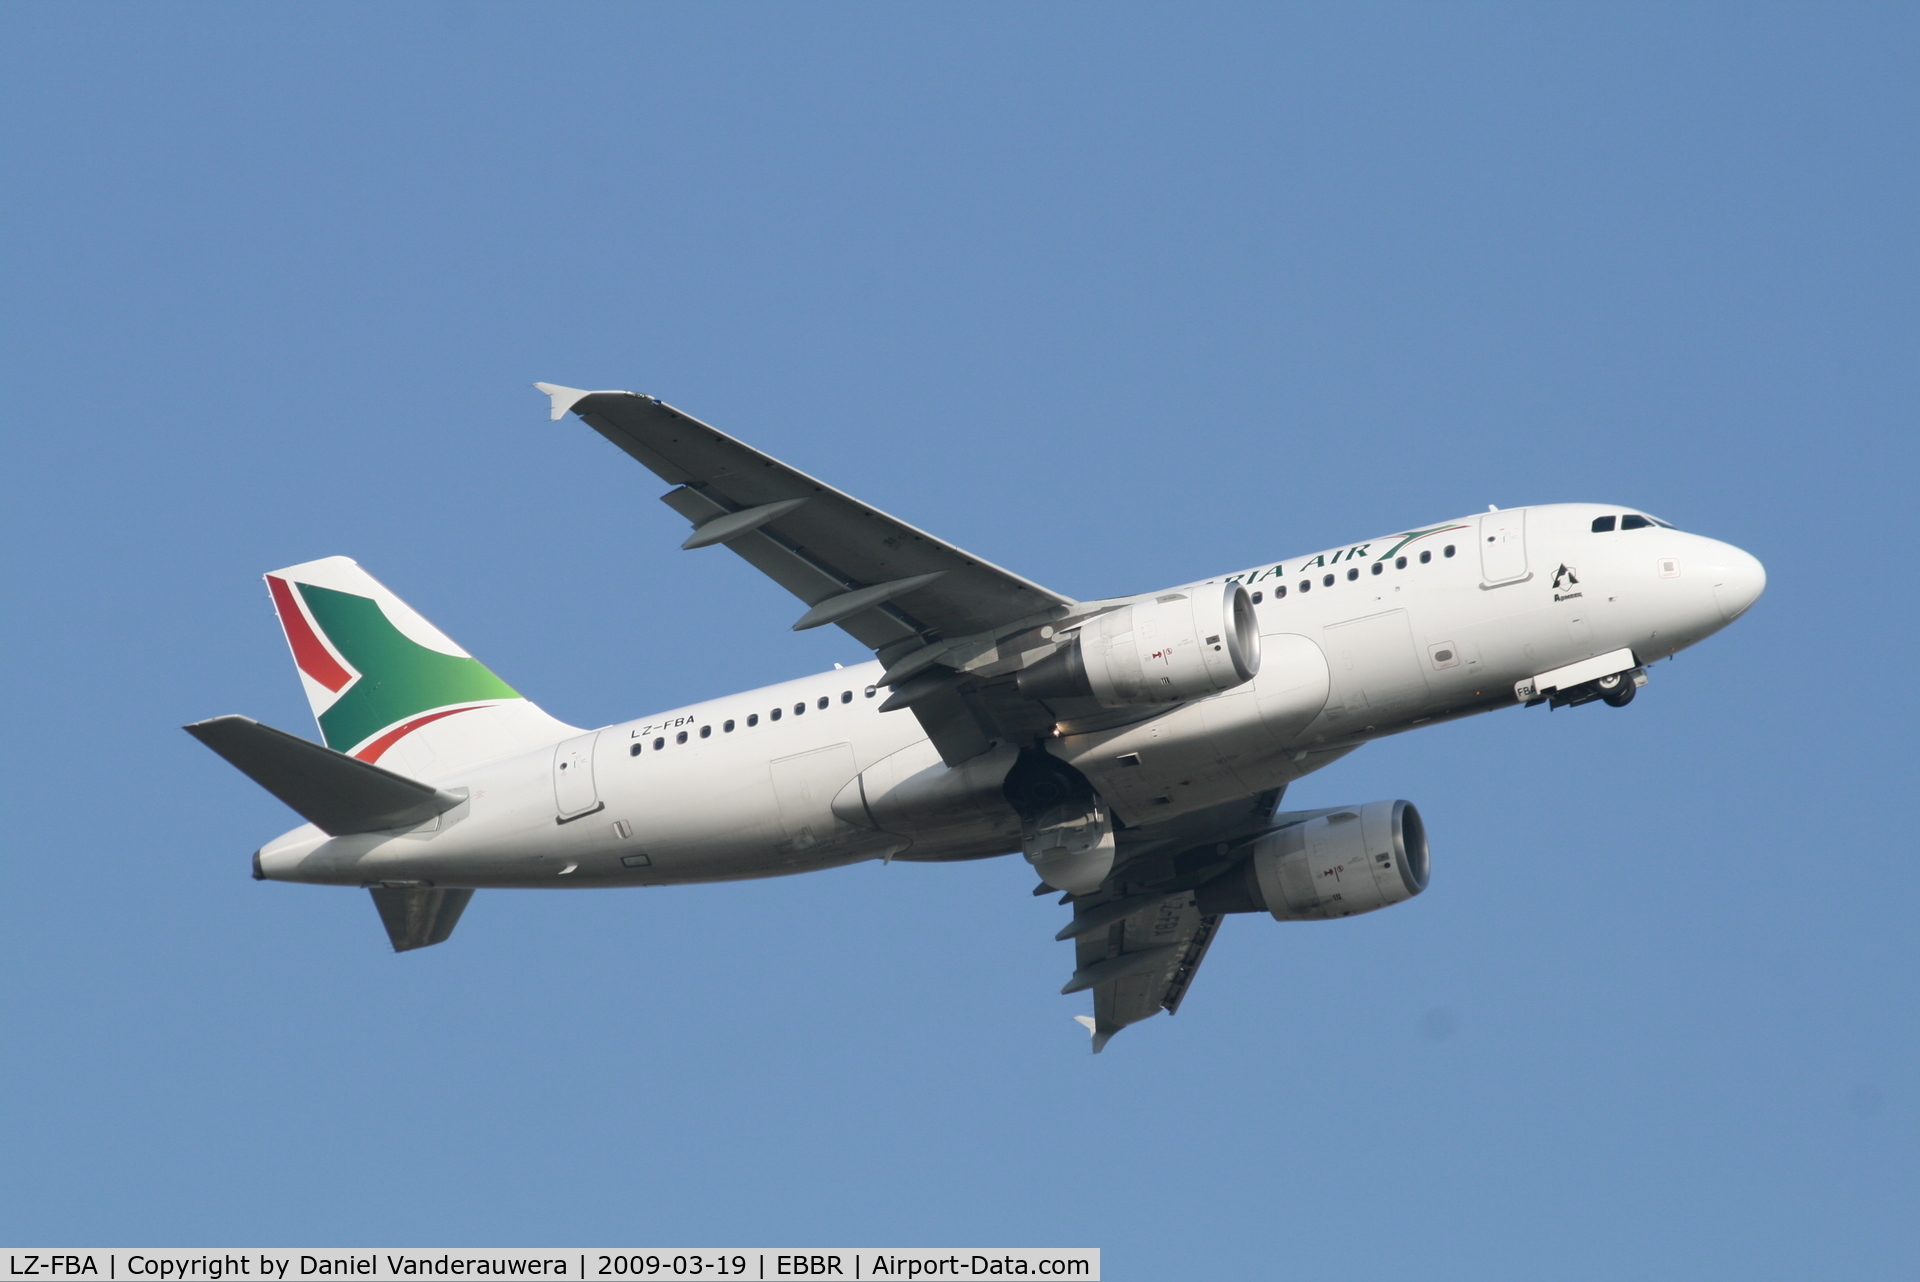 LZ-FBA, 2008 Airbus A319-112 C/N 3564, Flight FB406 is taking off from RWY 07R